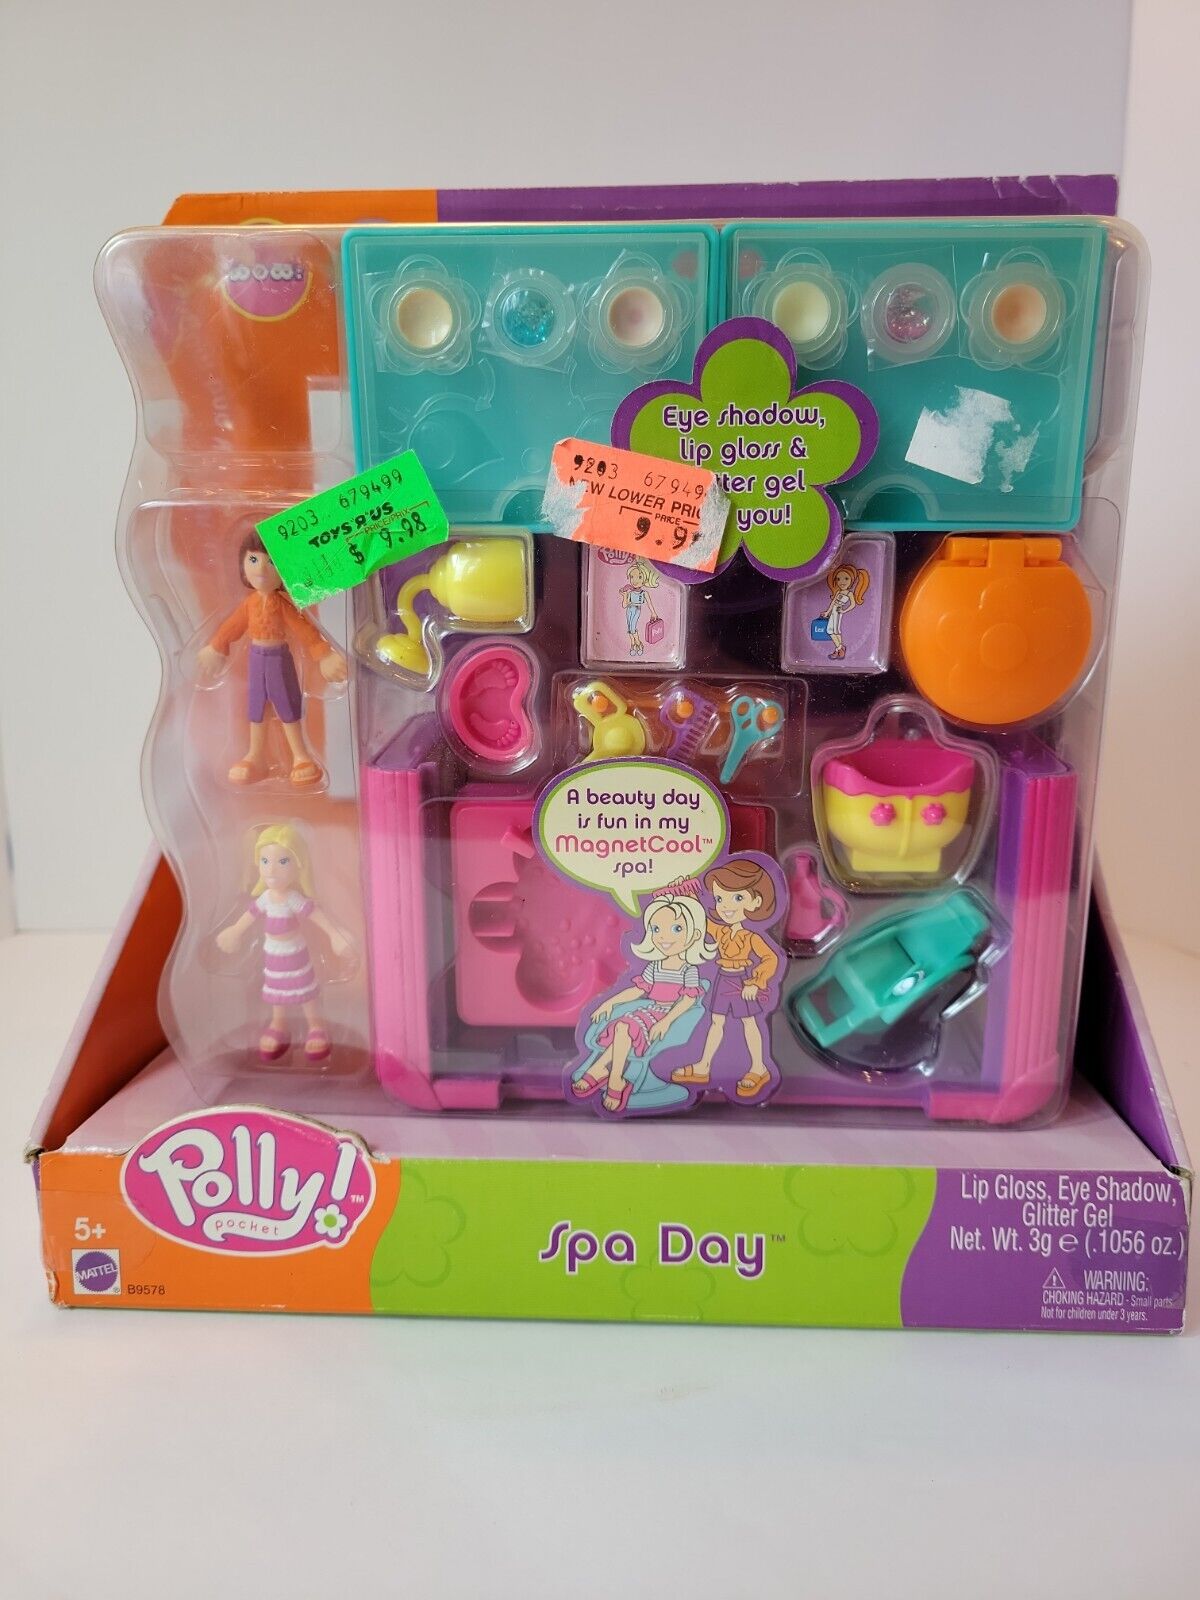 Polly Pocket Spa Day Playset with Eye shadow, lip gloss  glitter gel. 